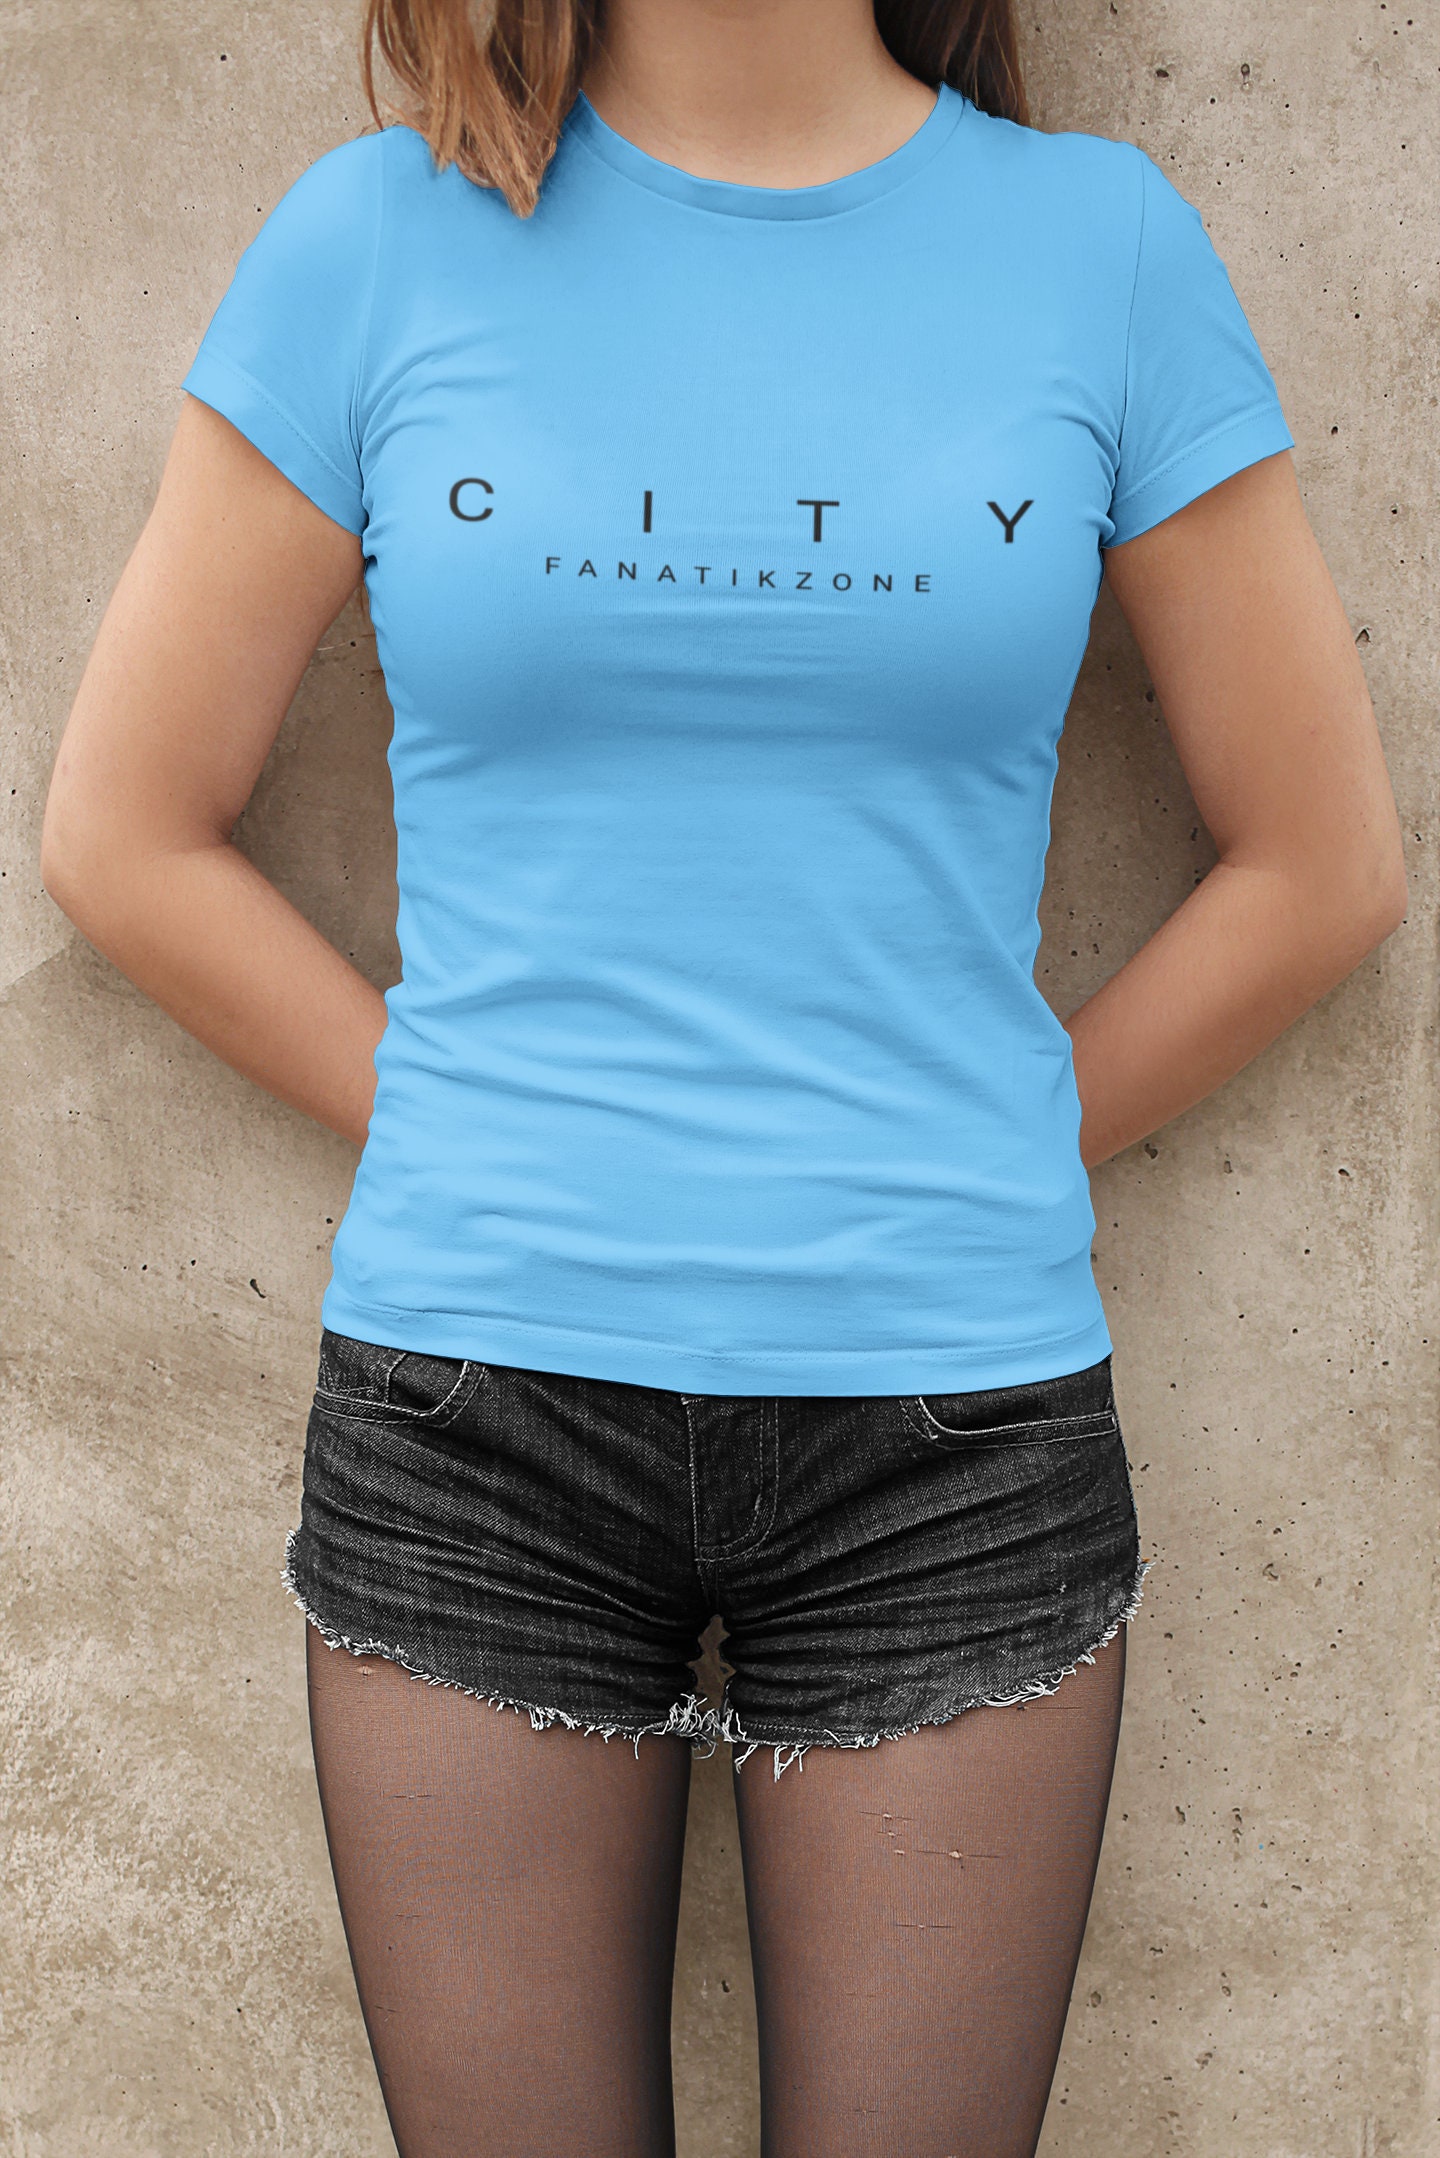 Manchester City FC Adult City Stadium T-Shirt